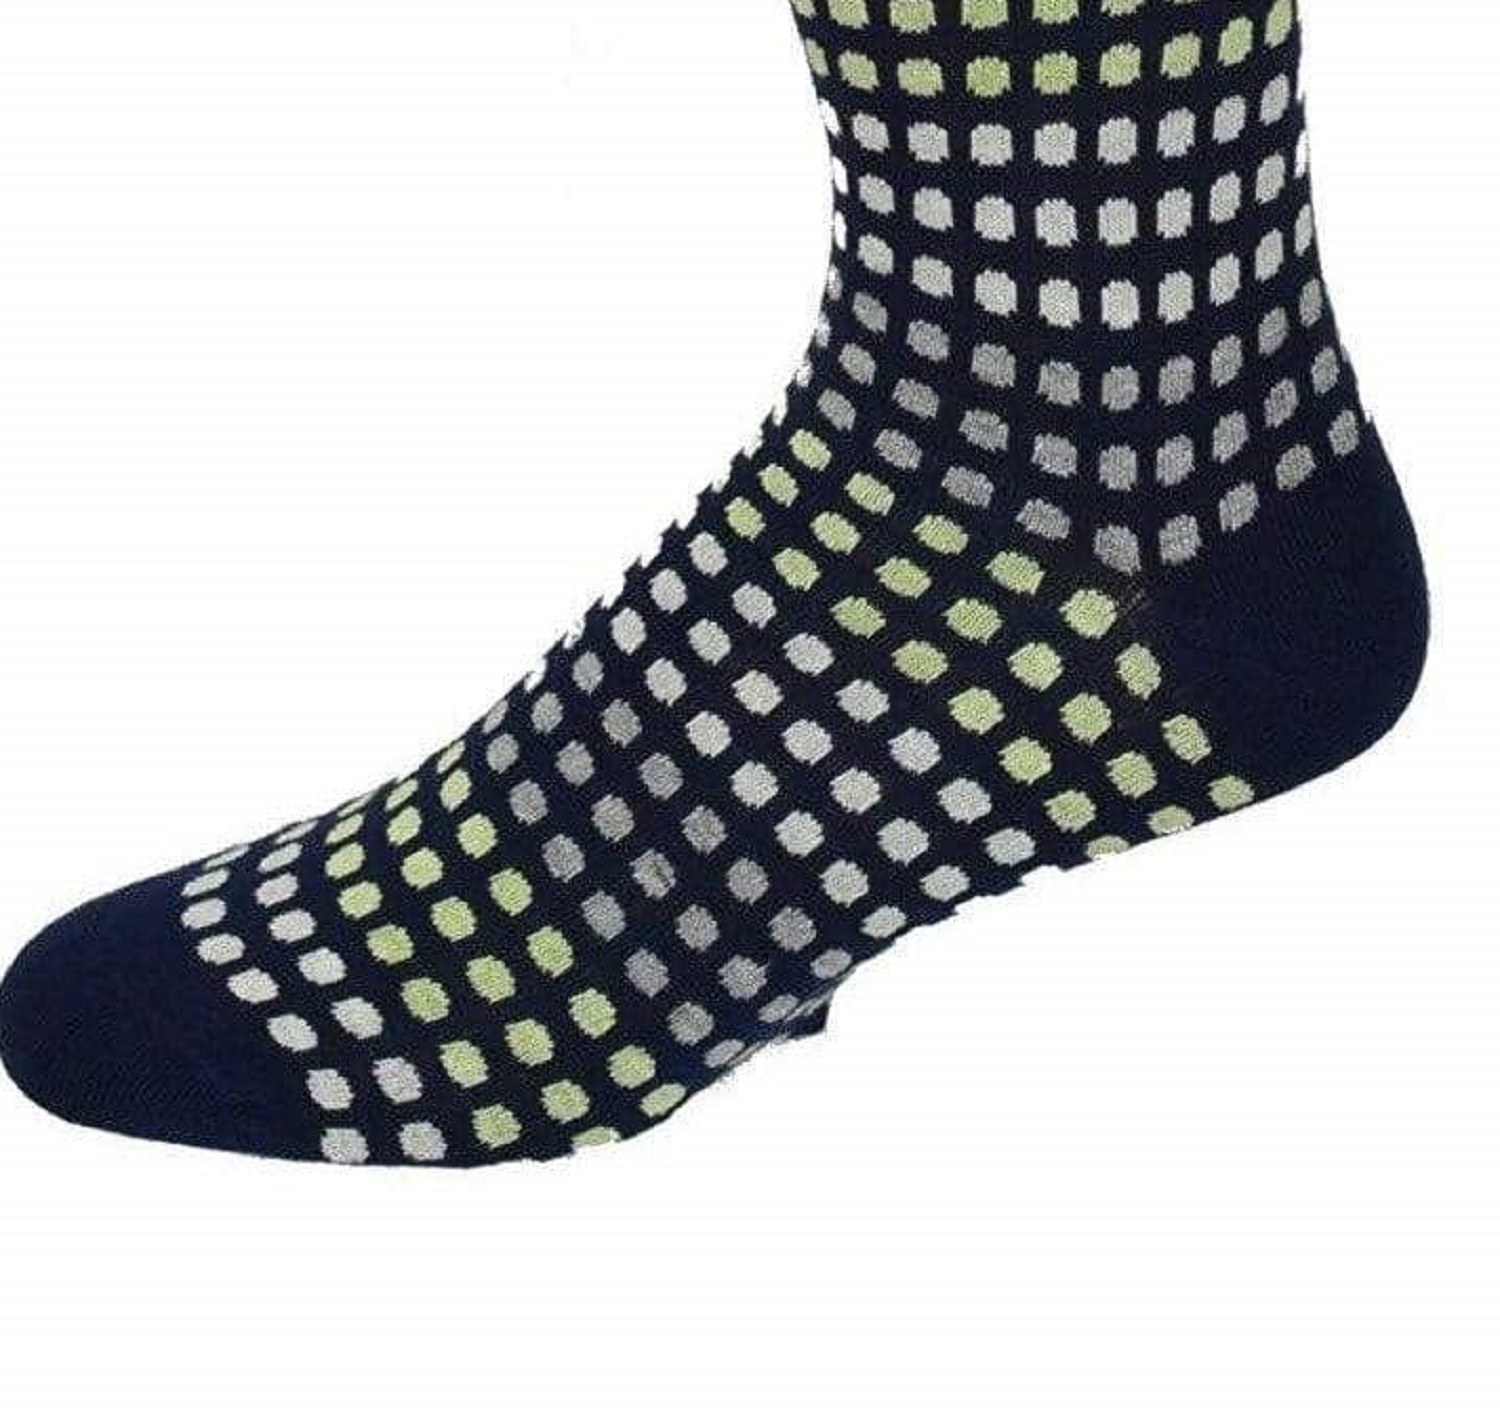 Sierra Socks Men's Casual Cotton Blend Fashion Design Mid Calf Dress Crew Socks, 3 Pairs (One Size: Fits US Men’s Shoe Size 6-12/ Sock Size, Navy Square/Navy Plain (M5500U)) - image 4 of 5